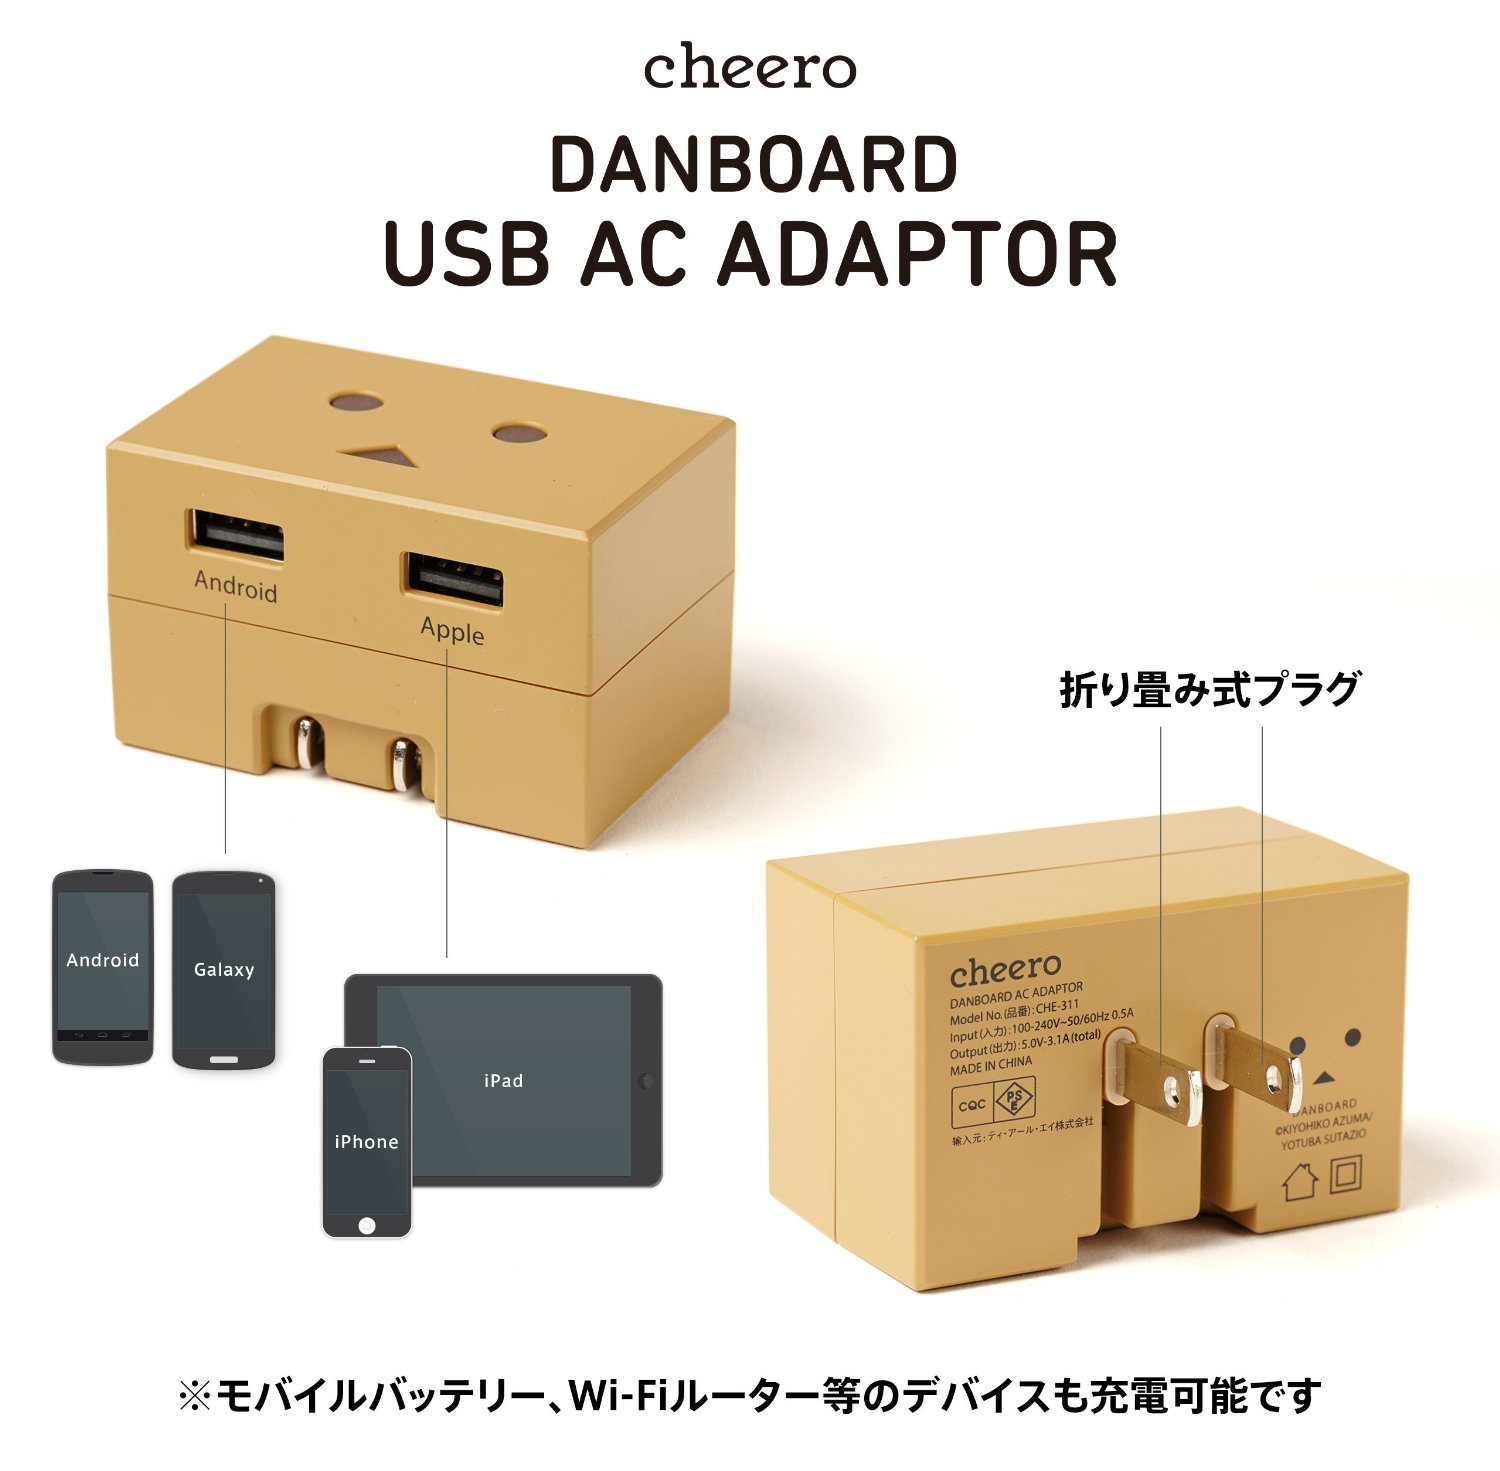 DANBOARD USB AC ADAPTOR 04